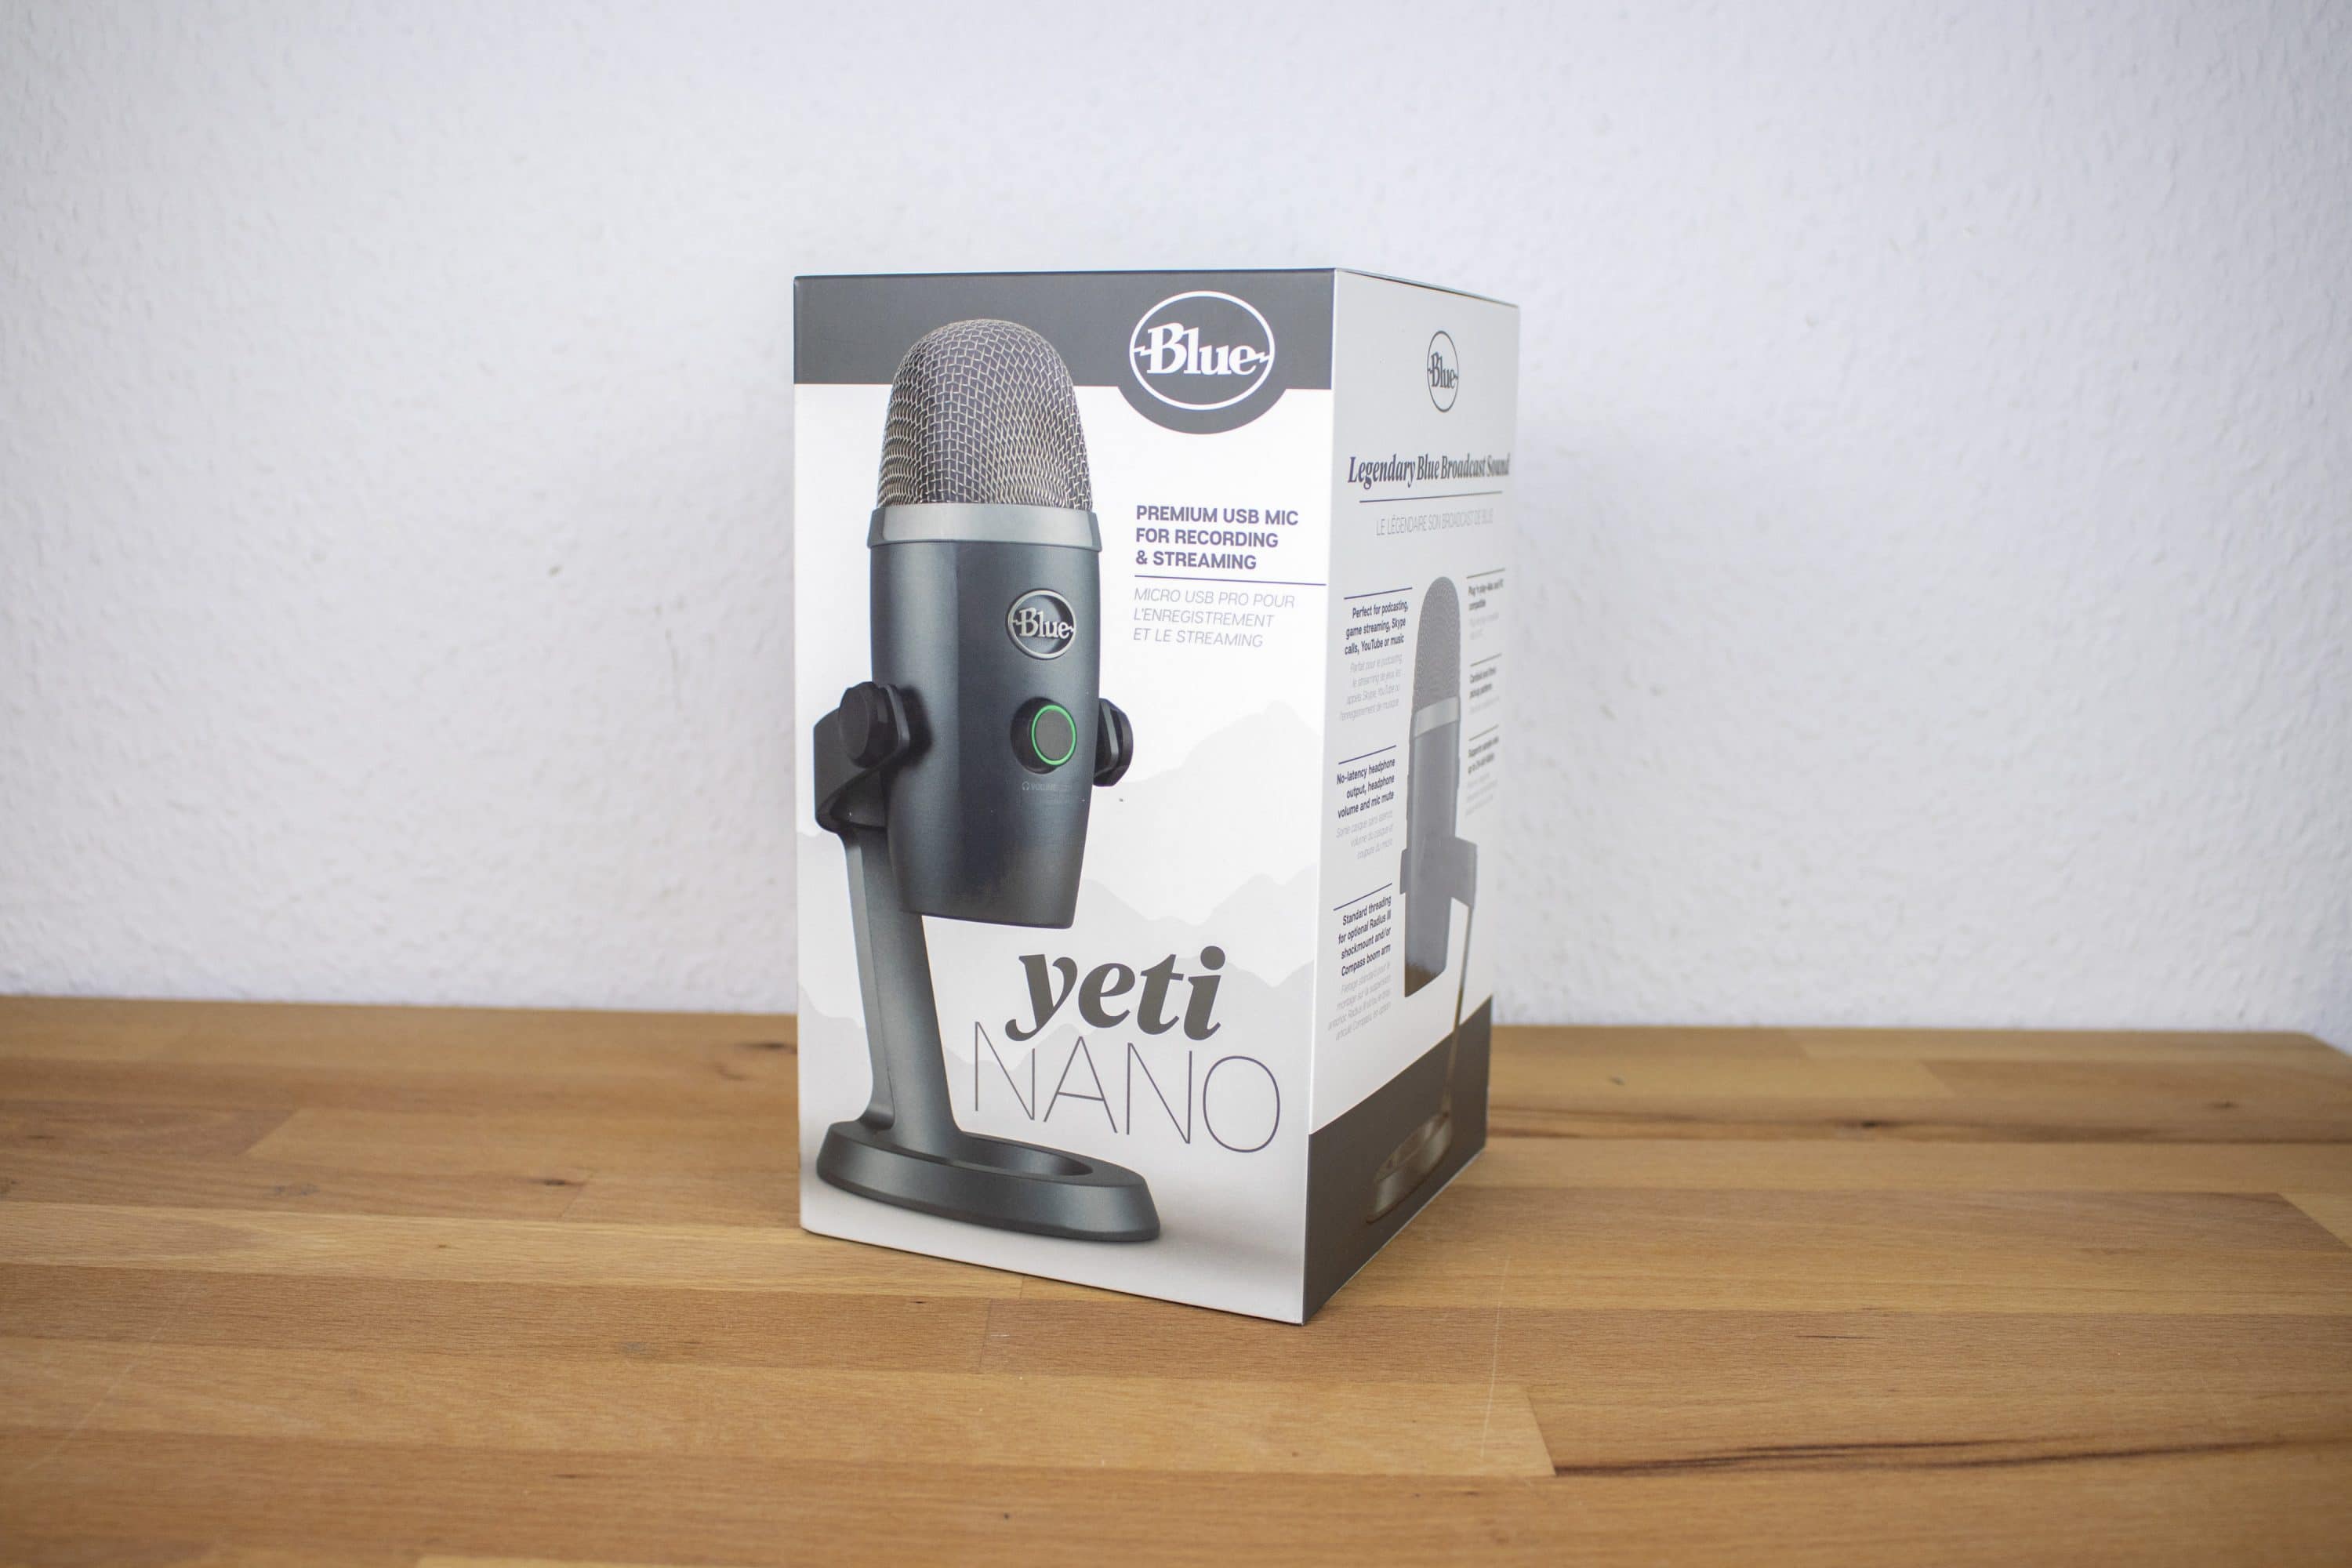 Blue Yeti Nano The Compact Usb Microphone Reviewed